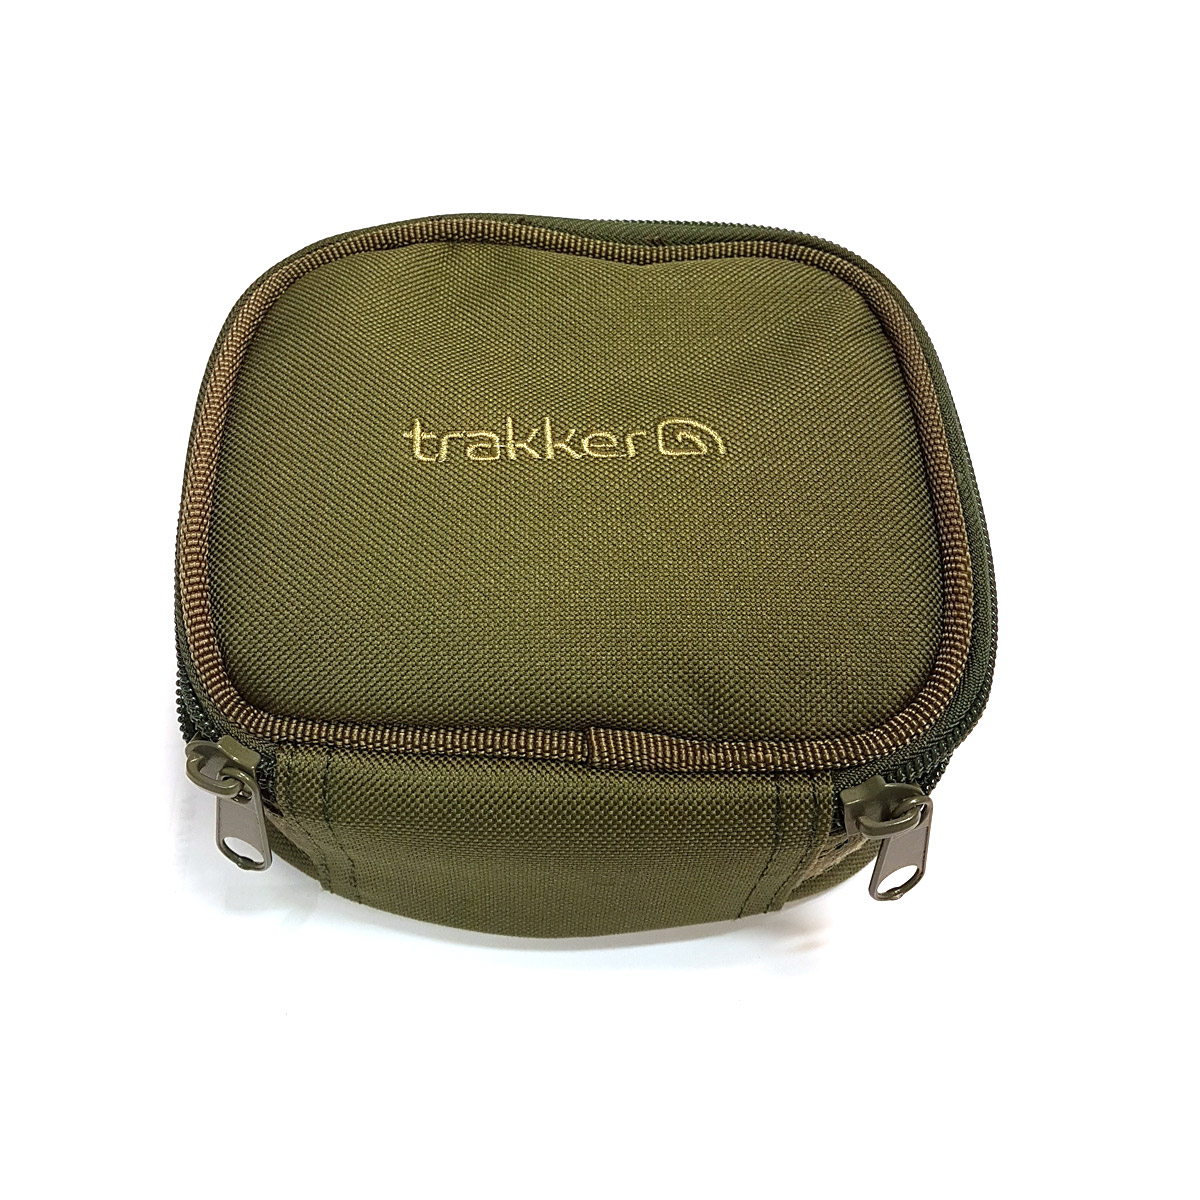 Trakker nxg lead pouch twin compartment